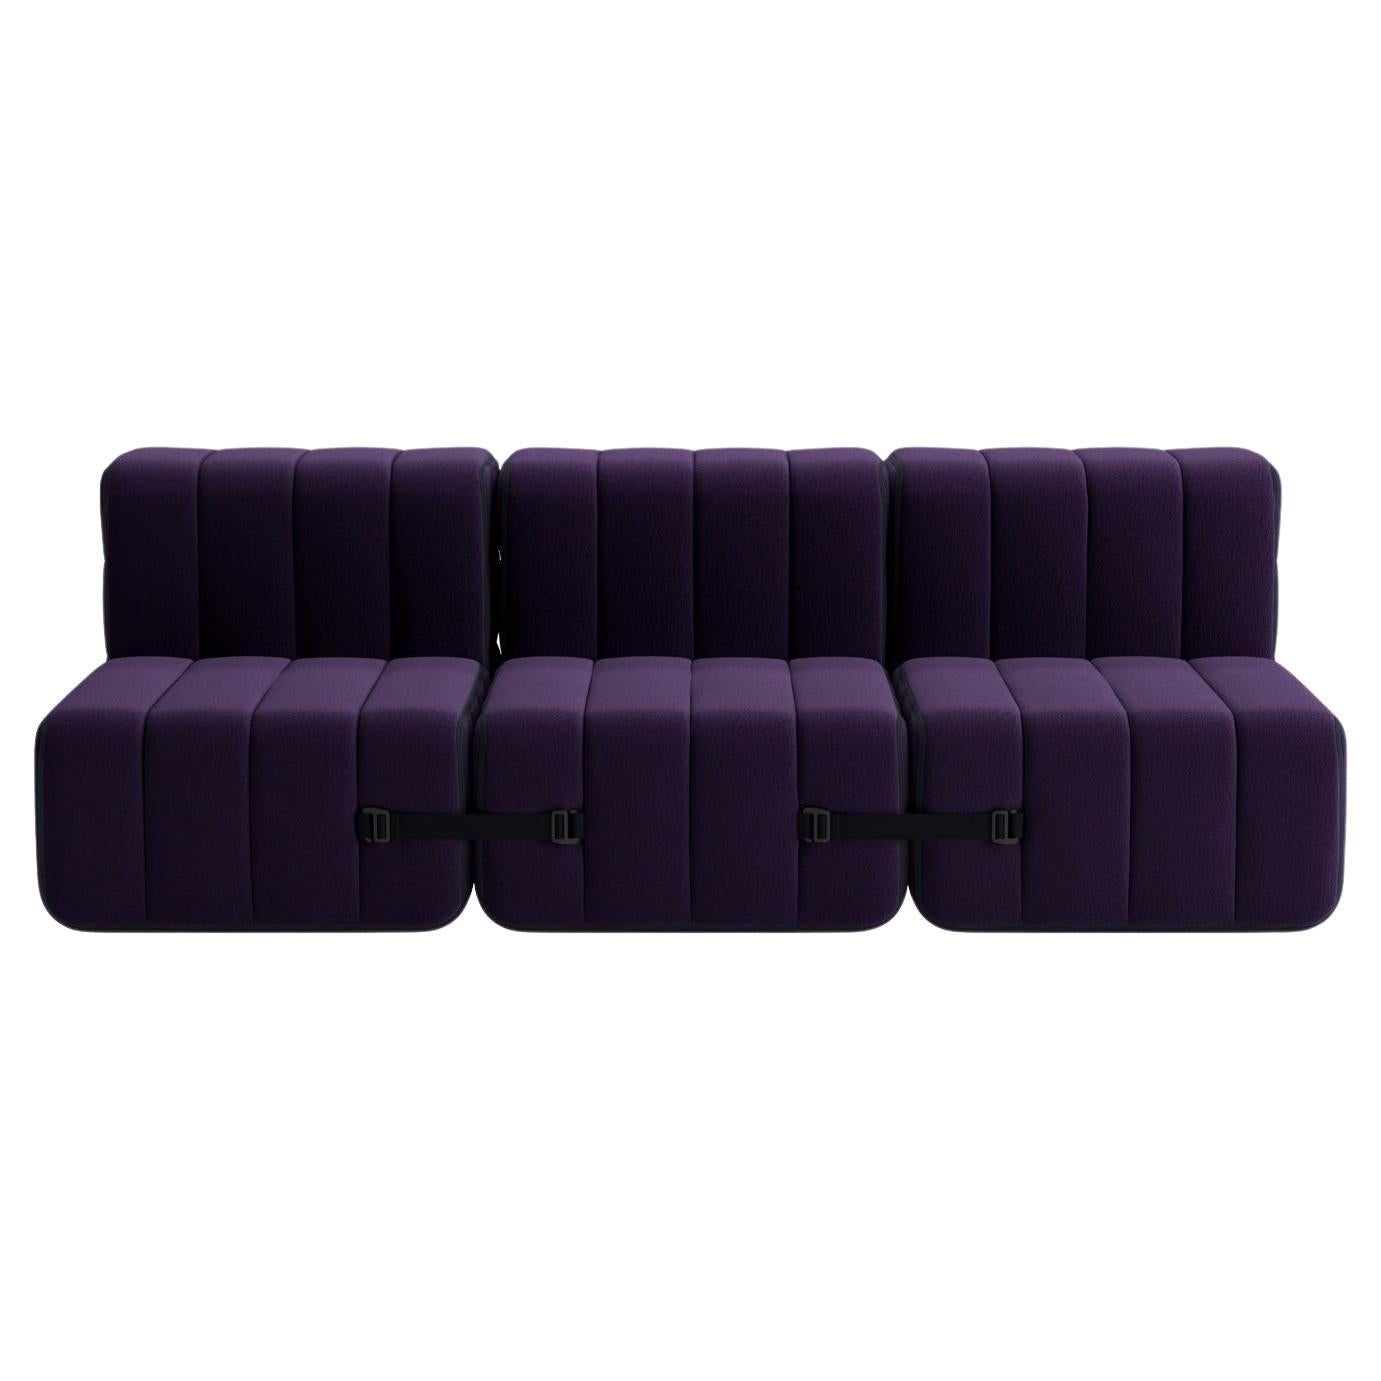 Curt Set 6 Modules, Fabric Jet '9607 Blue / Purple', Curt Modular Sofa System